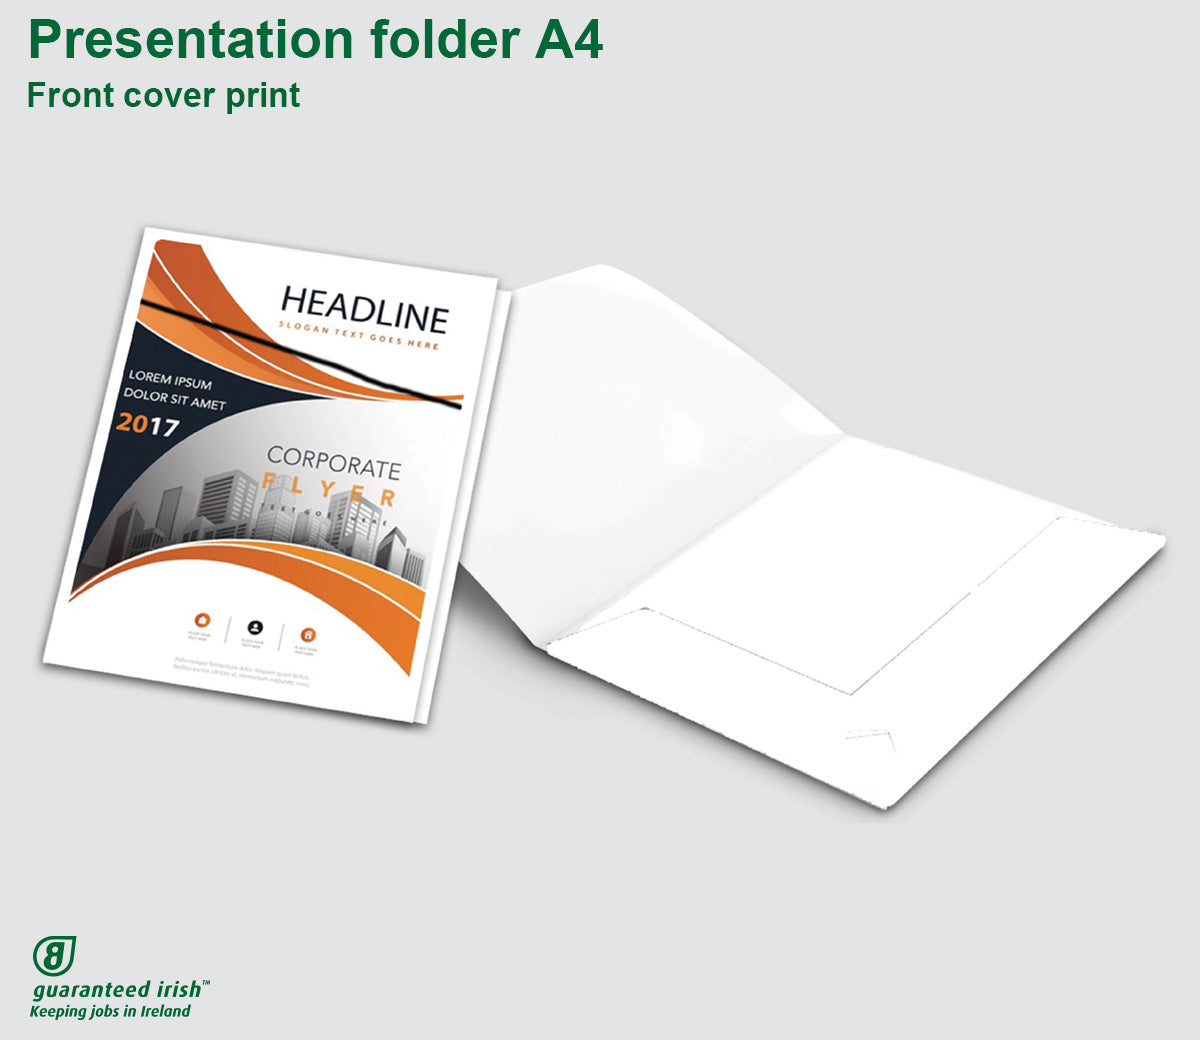 Presentation folder A4 - Front cover print